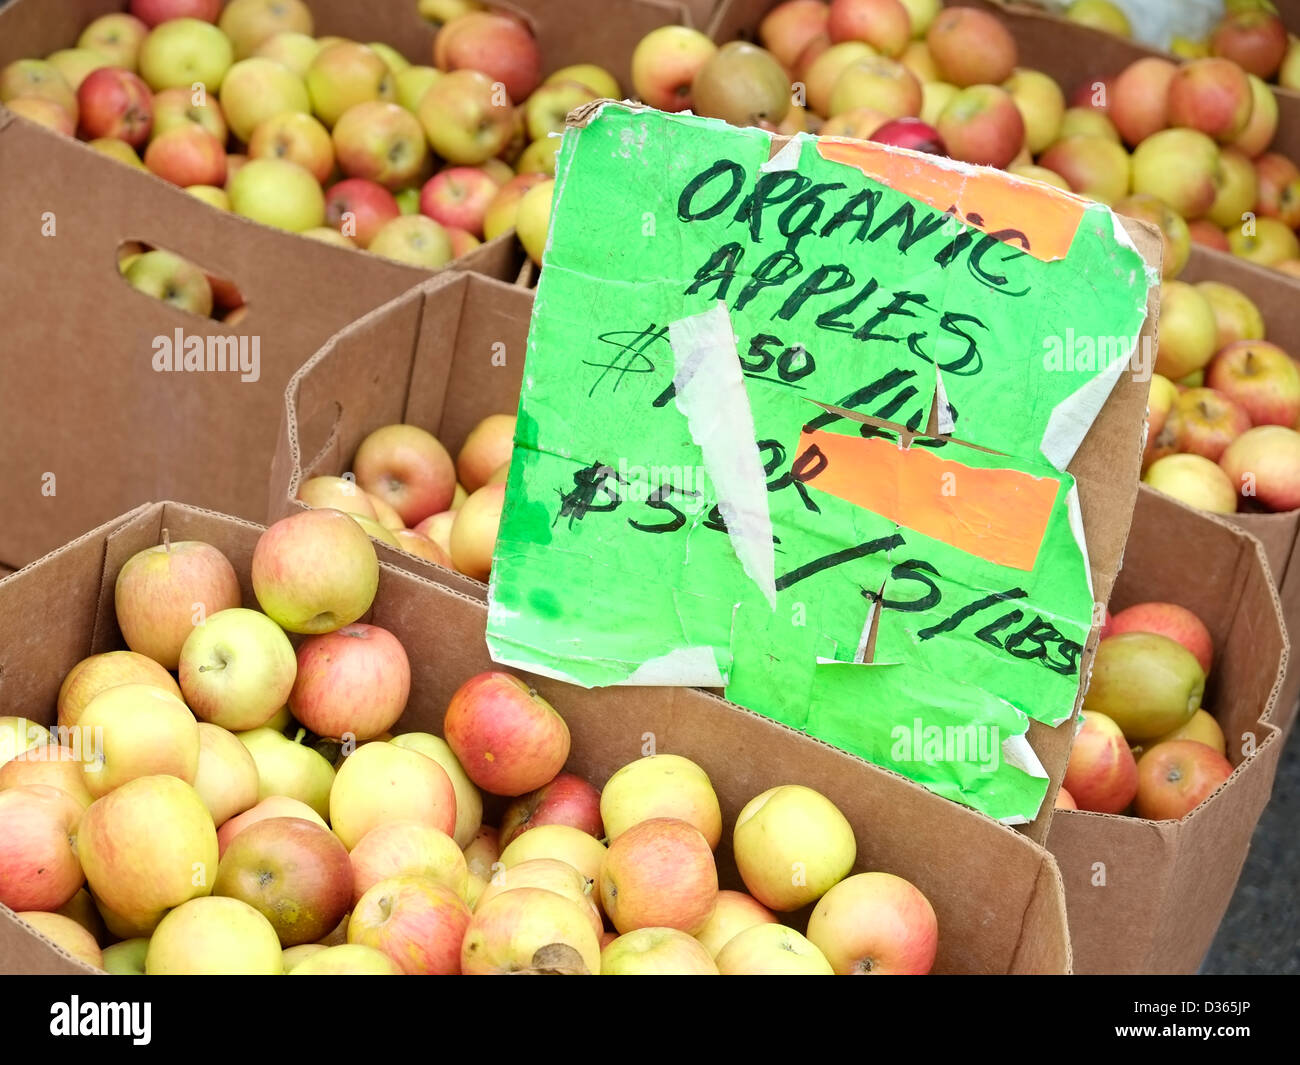 https://c8.alamy.com/comp/D365JP/organic-apples-in-farmers-market-D365JP.jpg